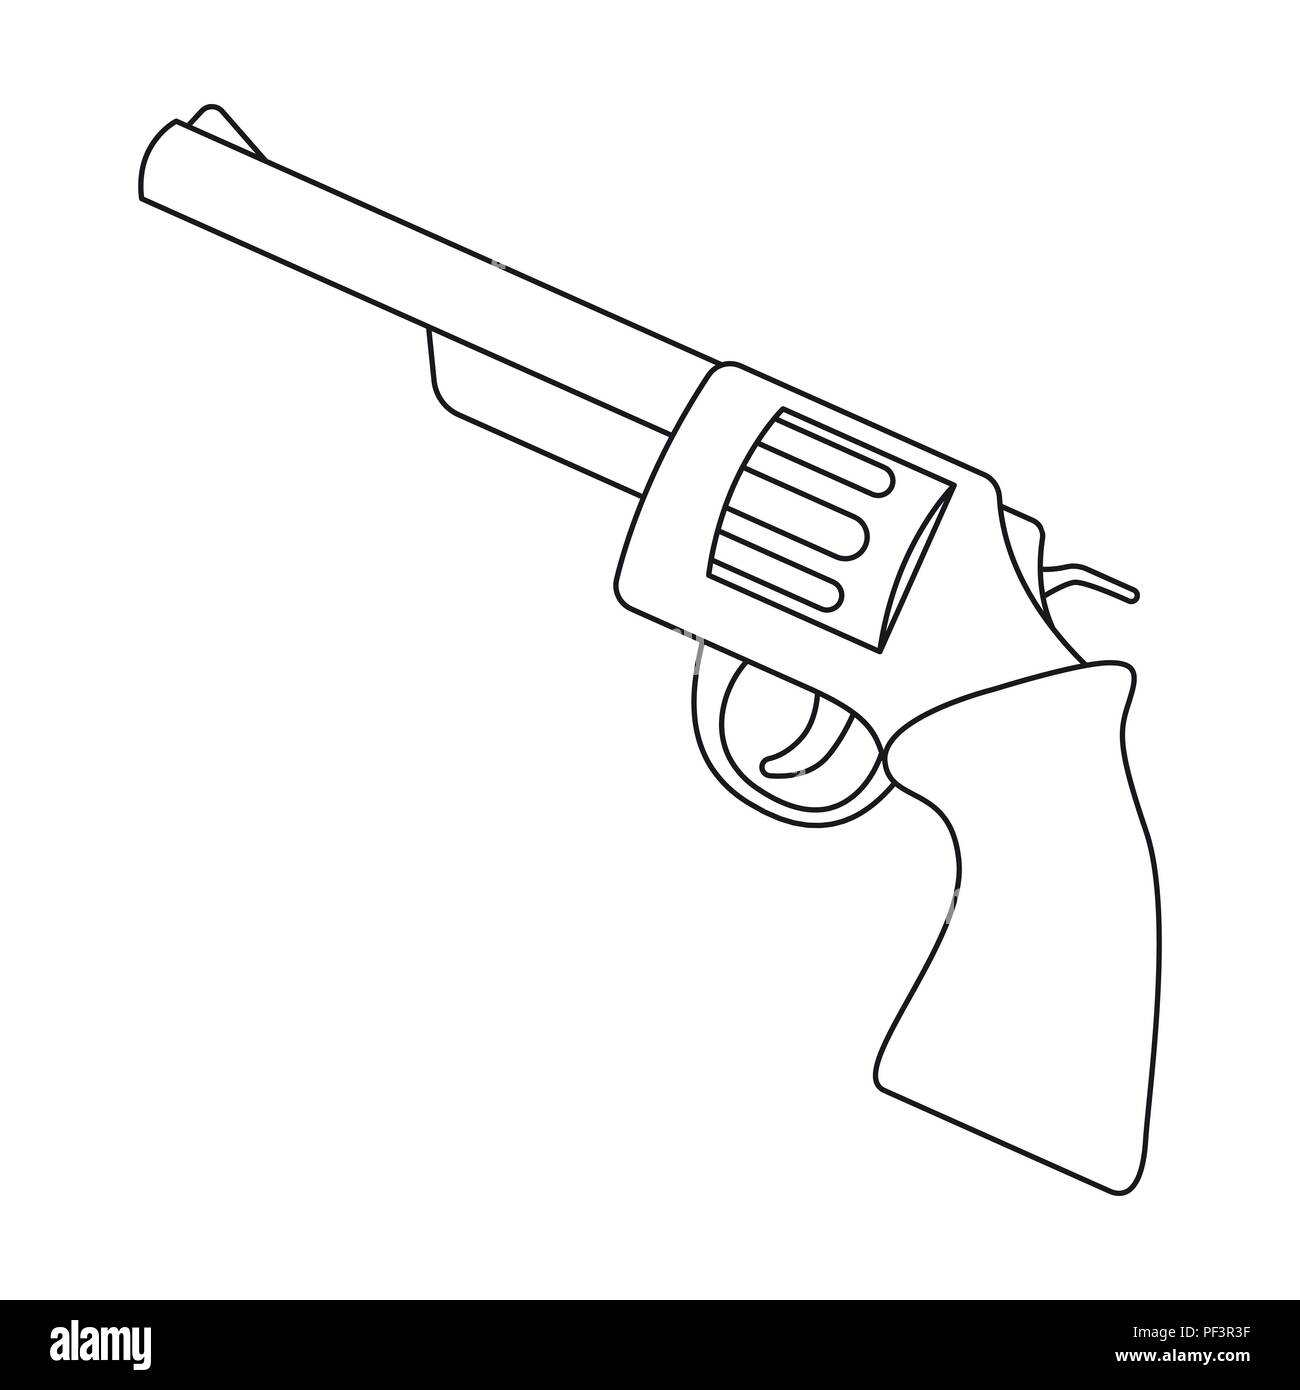 Arms Army Art Bullet Cowboy Cowboys Danger Design Firearm Gangster